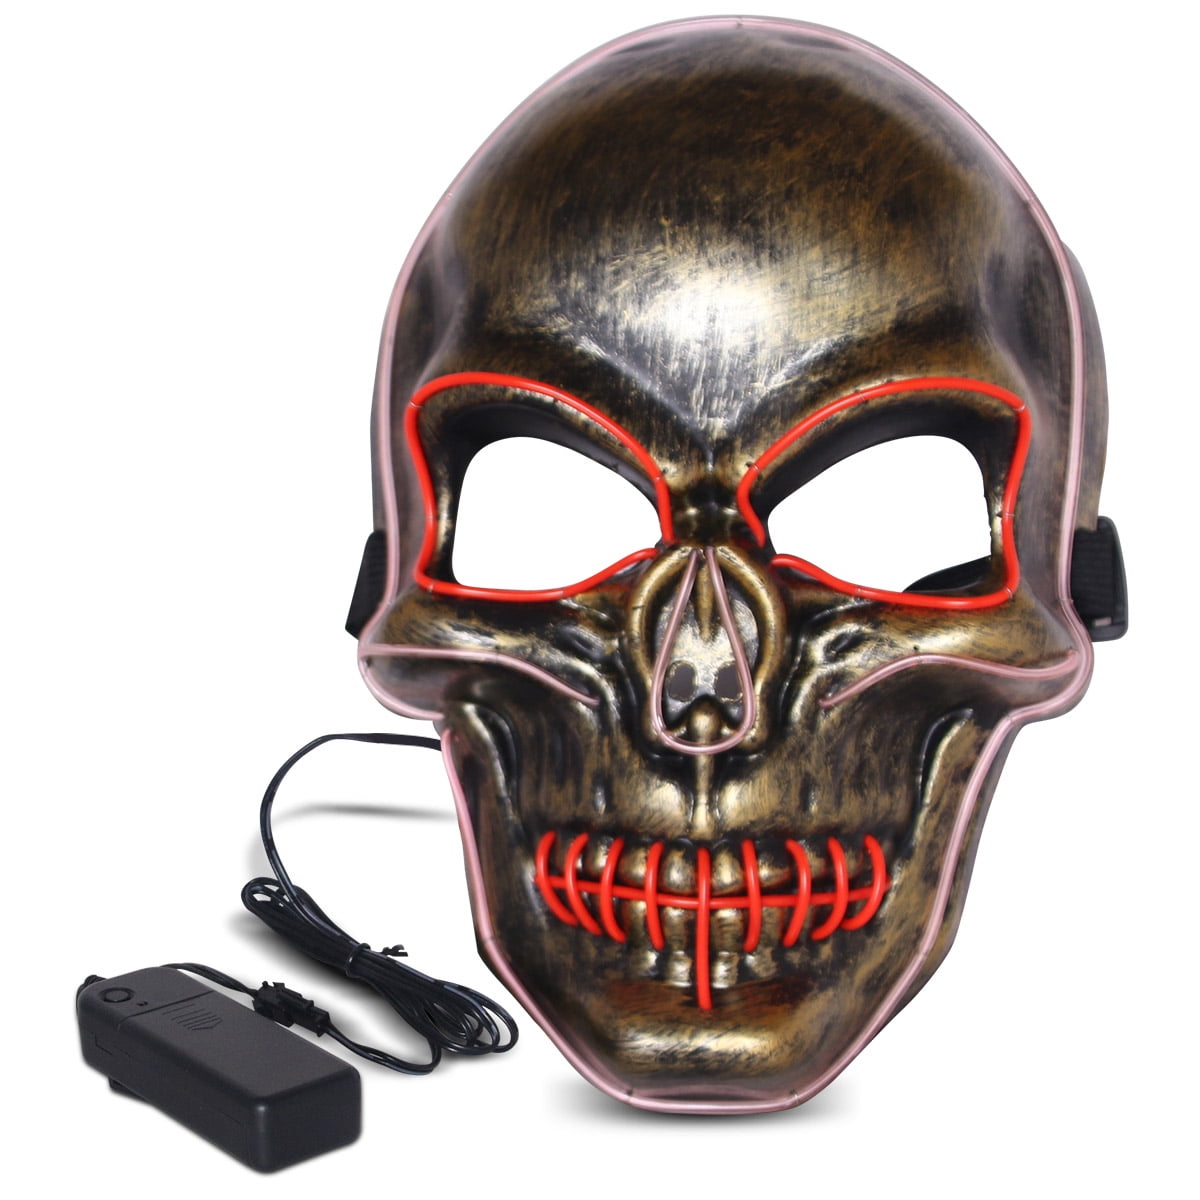 Safe EL Wire PVC DJs Mask Novelty Halloween Costume Party Creepy Props molezu LED Light Up Scary Purge Mask 